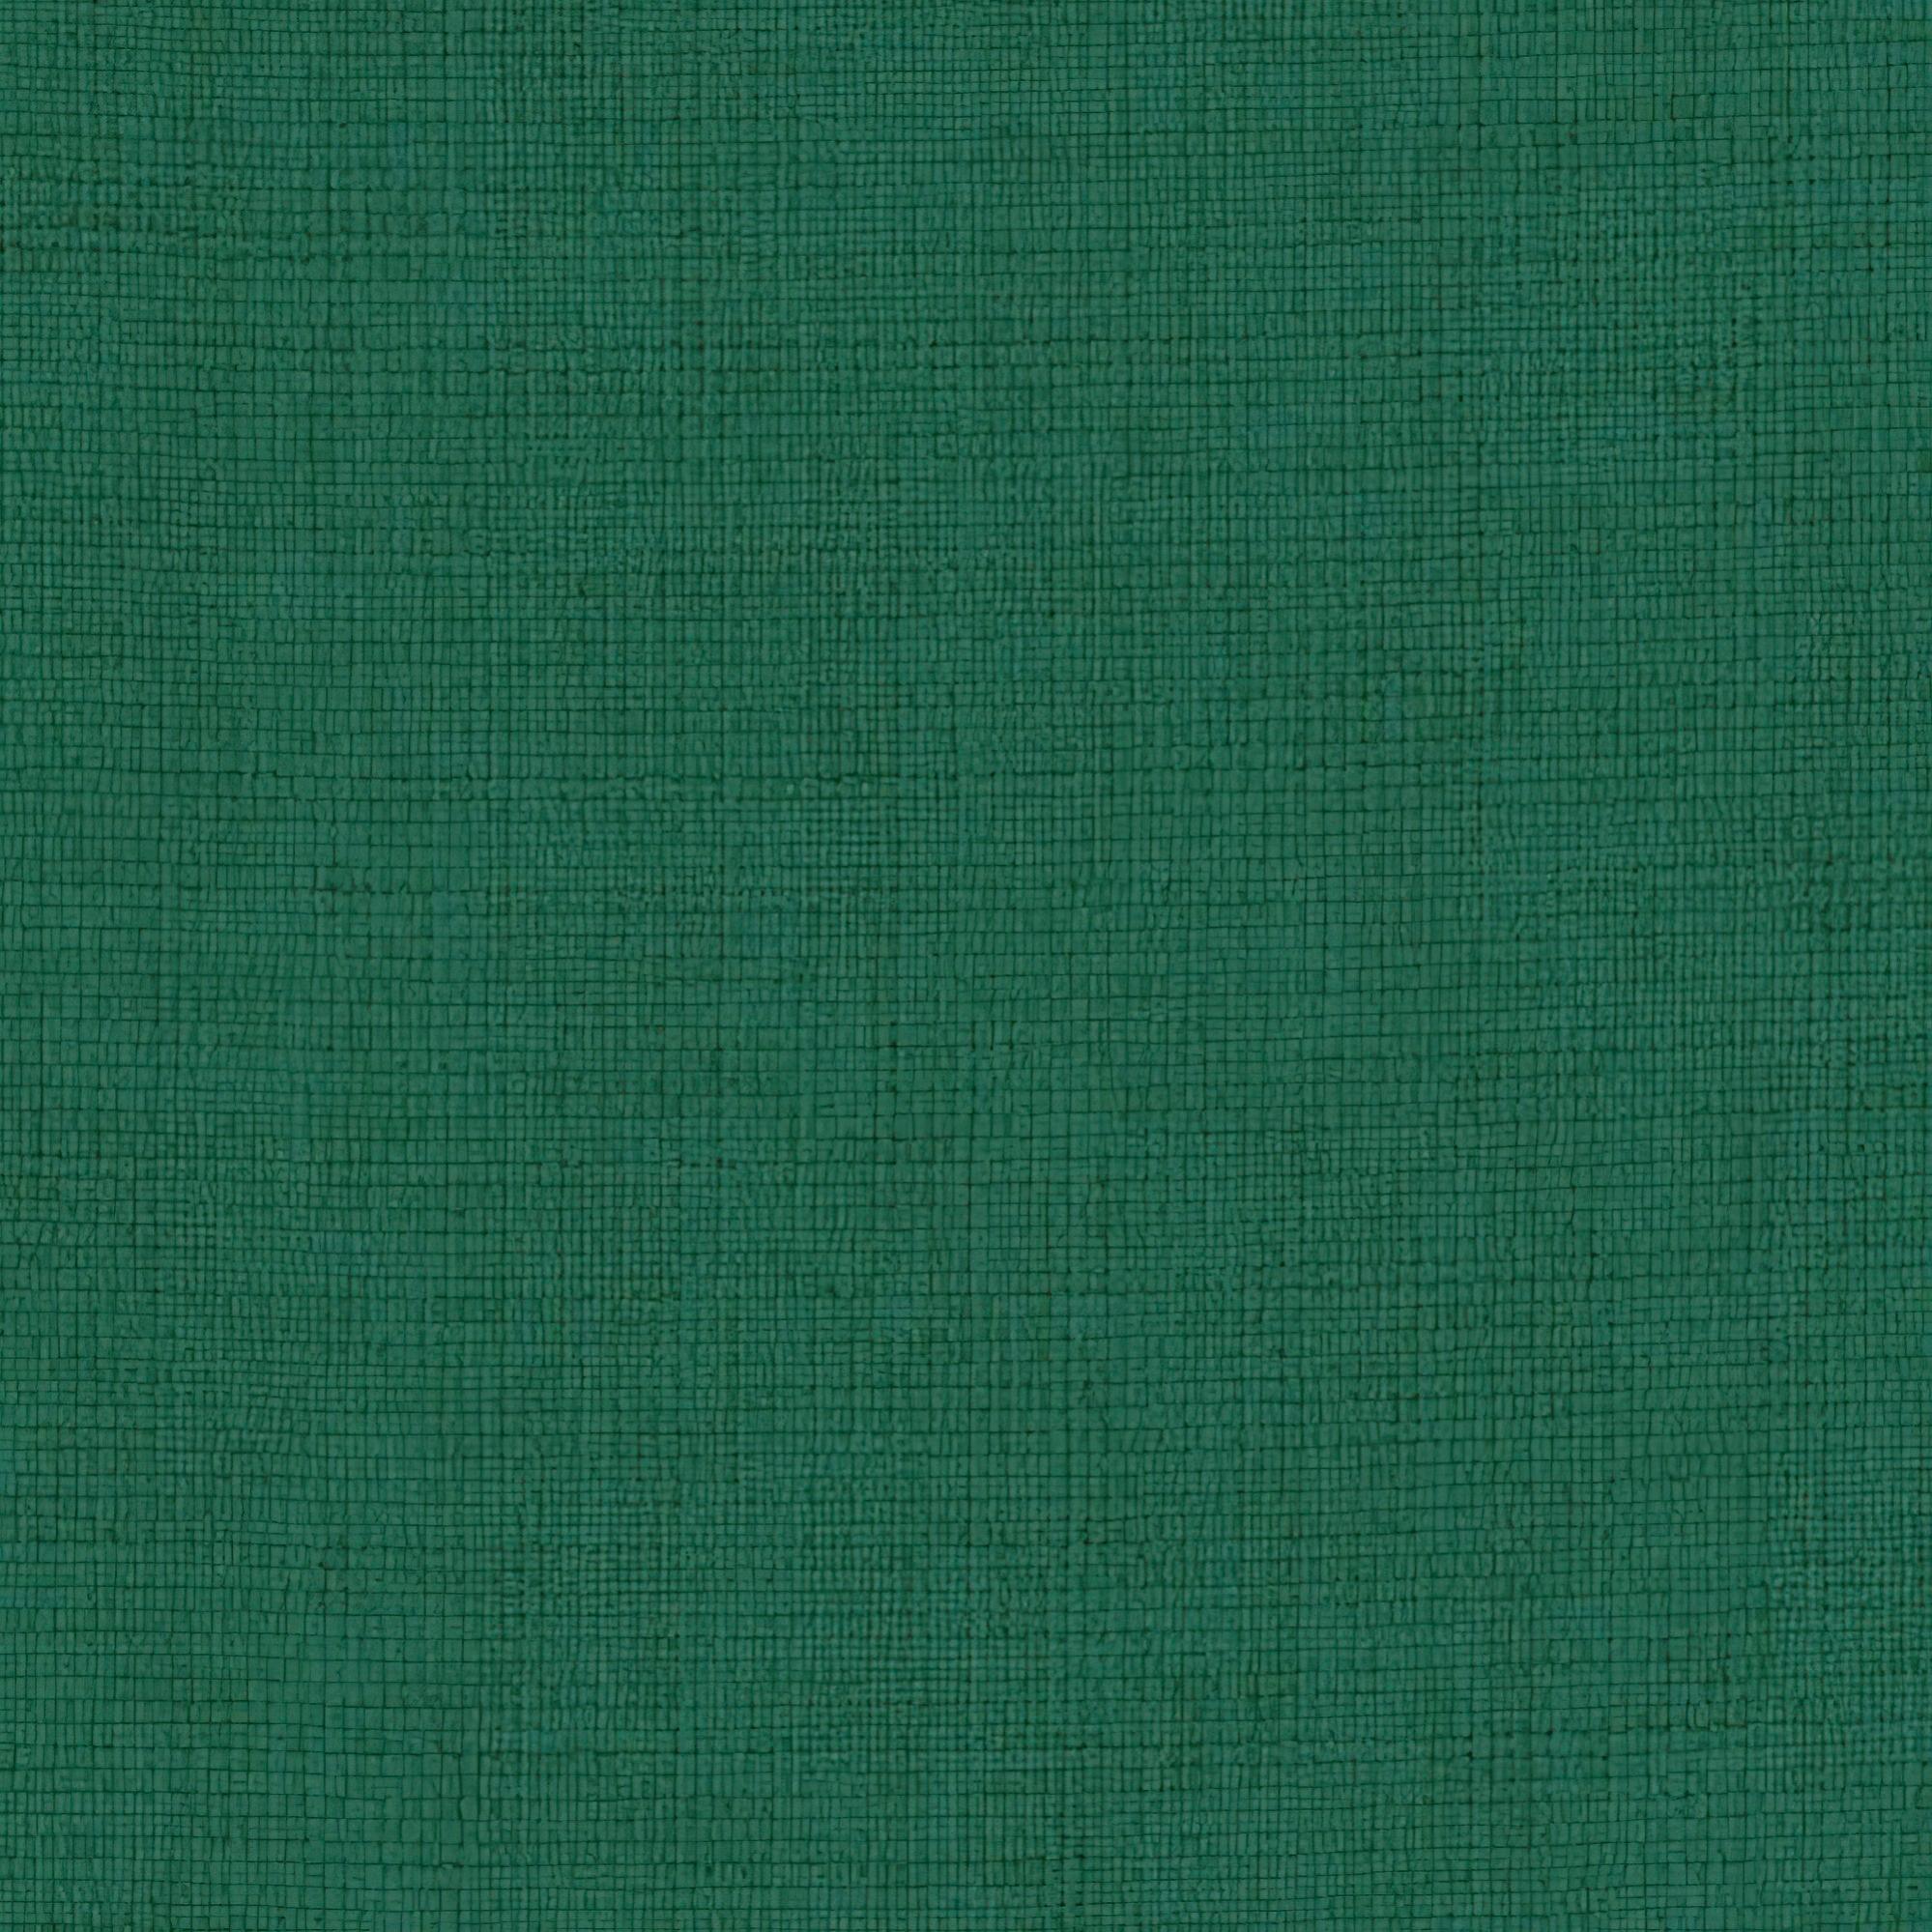 Tela al corte tapicería chenilla reims verde ancho 140 cm